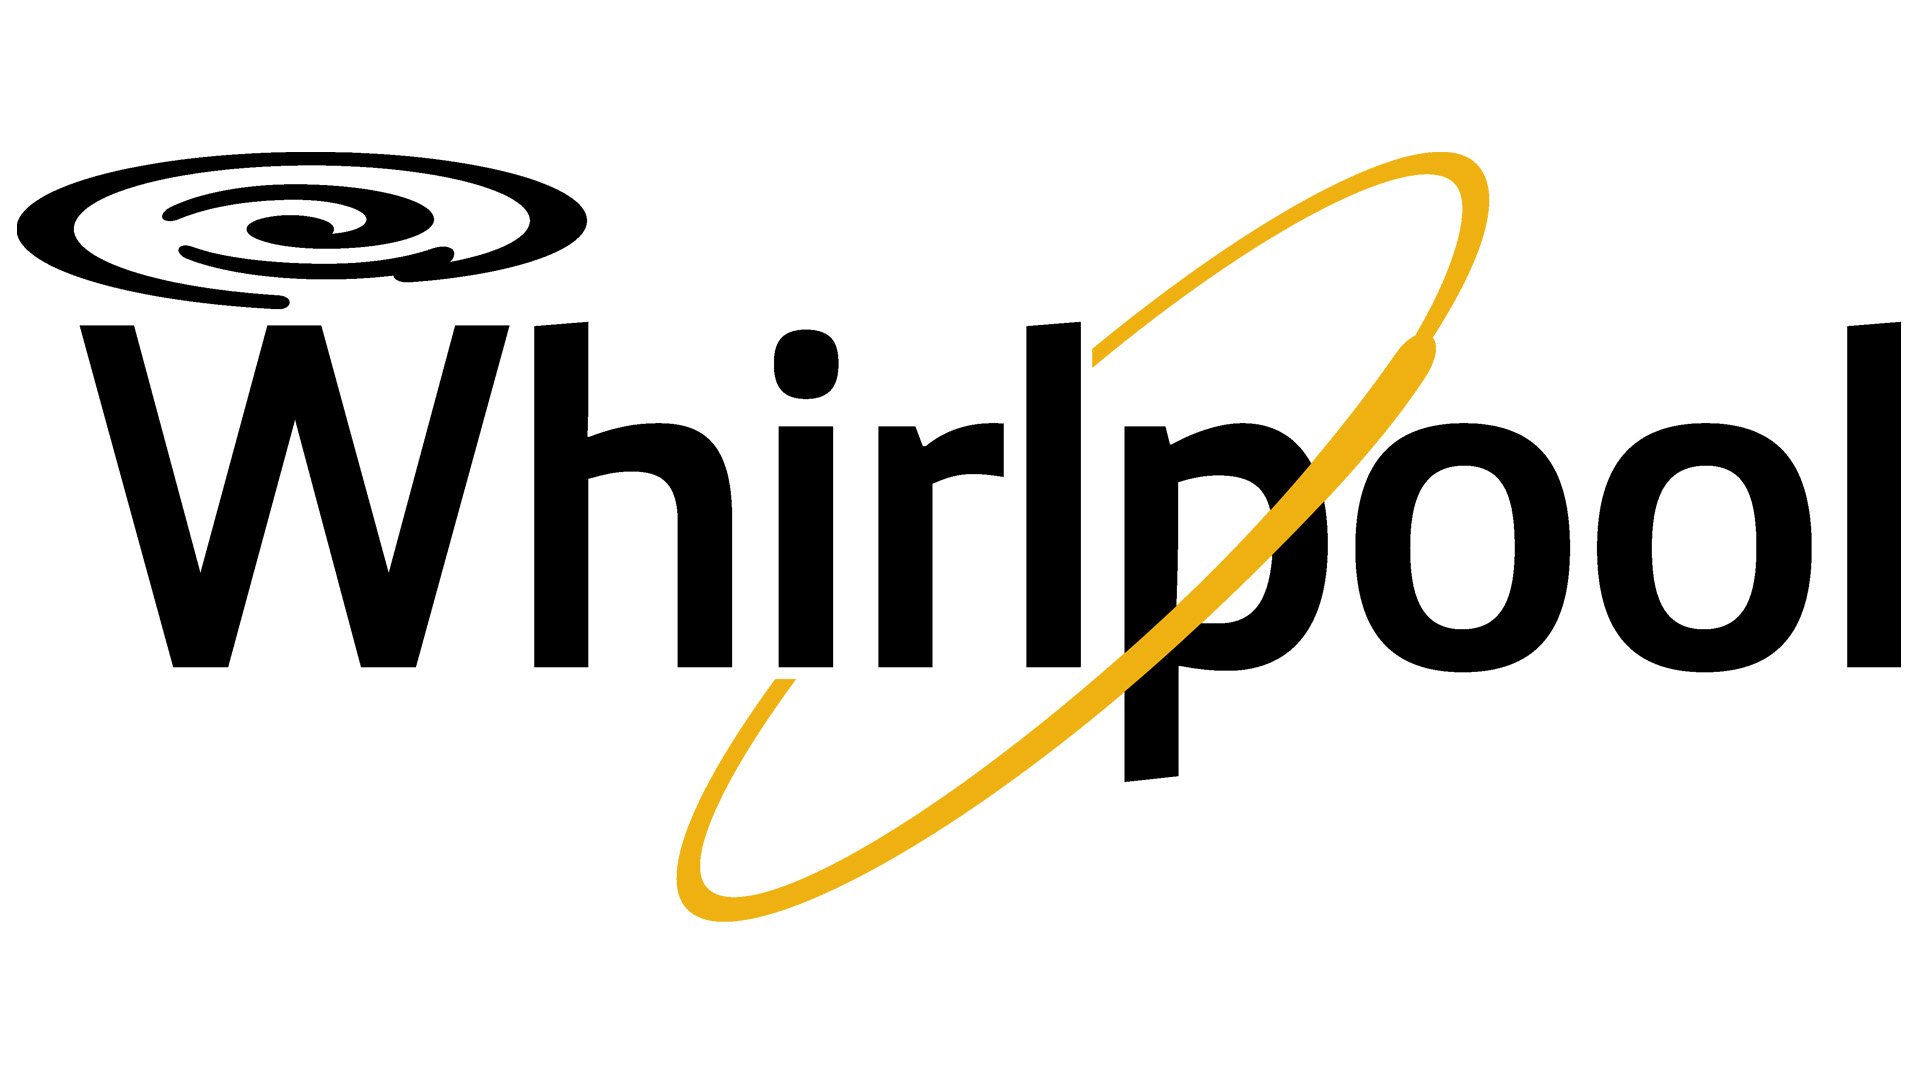 Whirlpool Company Logo